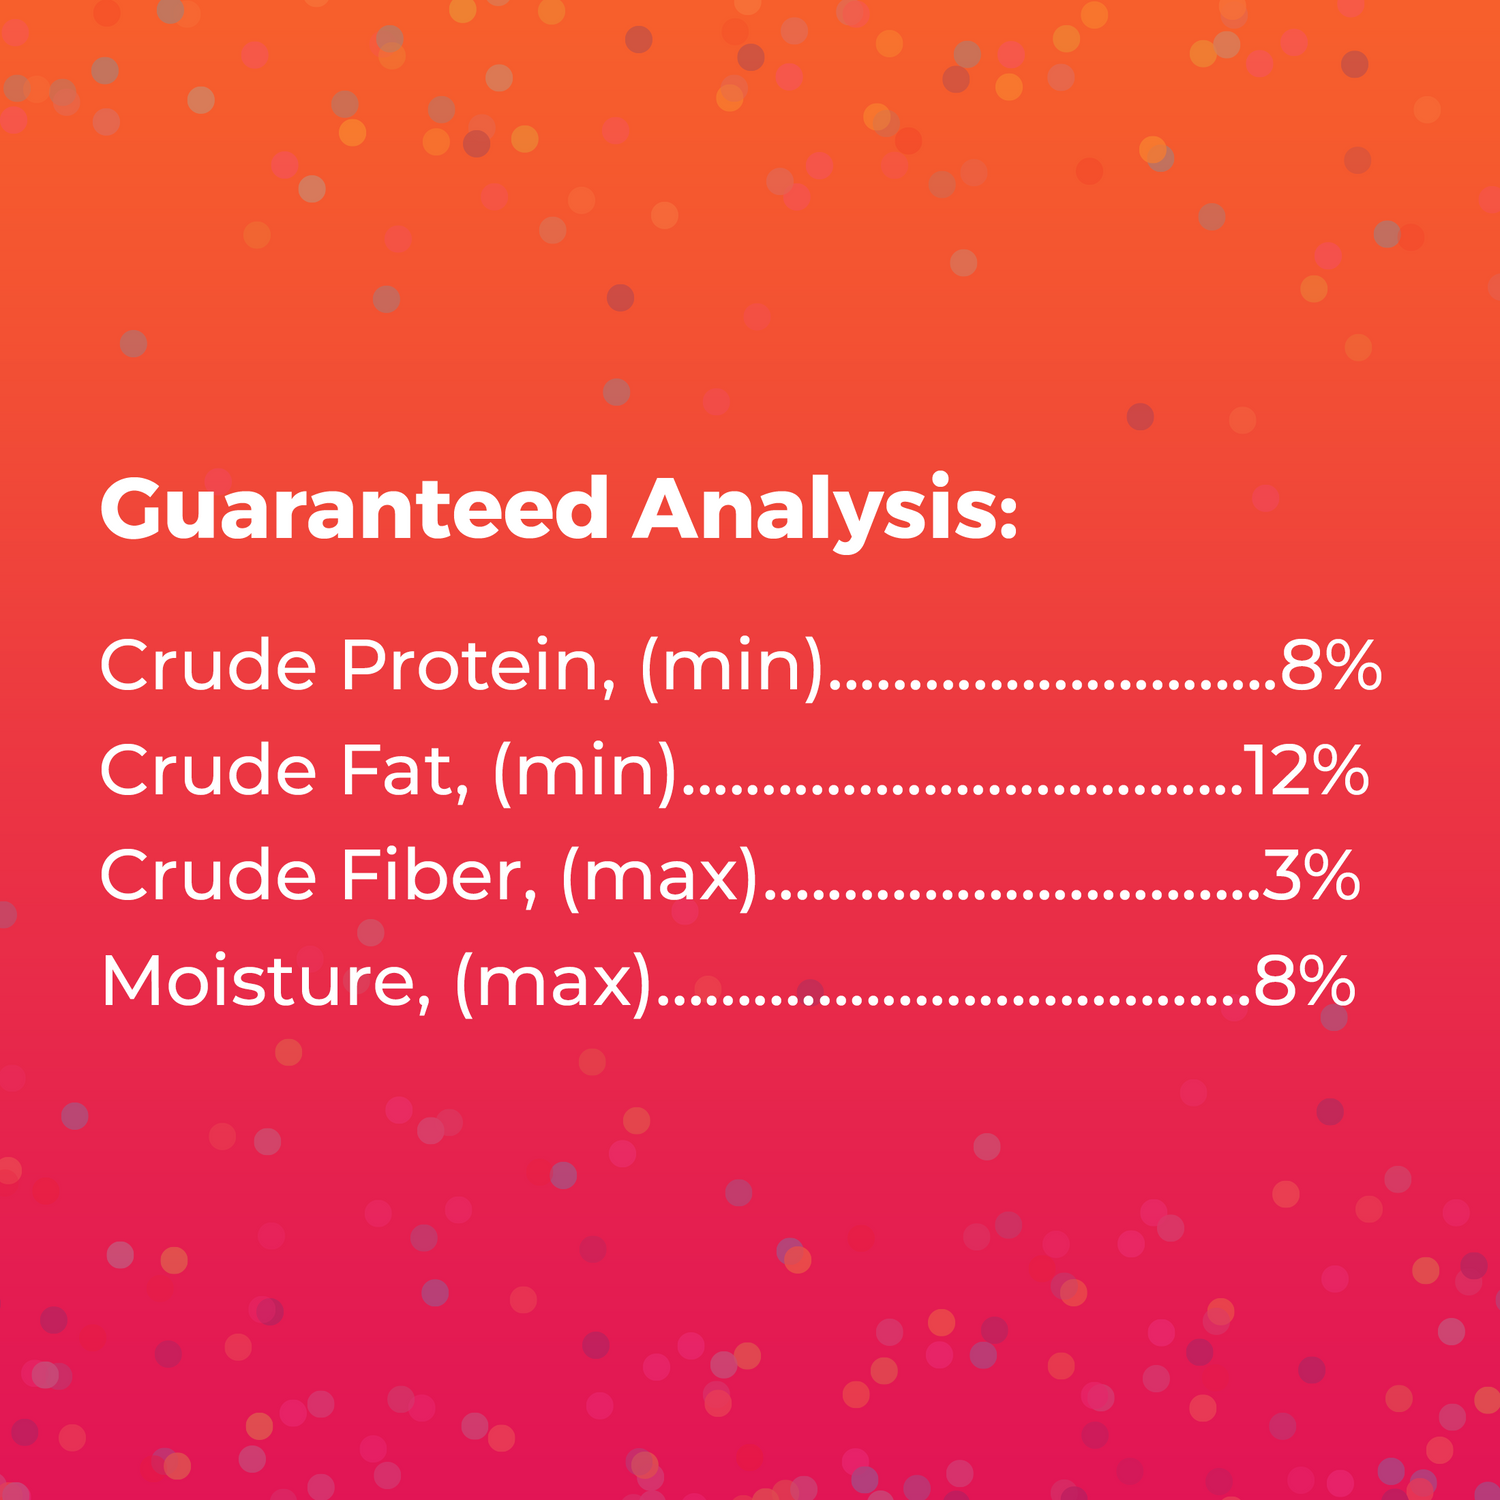 Guaranteed analysis graphic: crude protein (min.) 8%, crude fat (min.) 12%, crude fiber (max.) 3%, moisture (max.) 8%